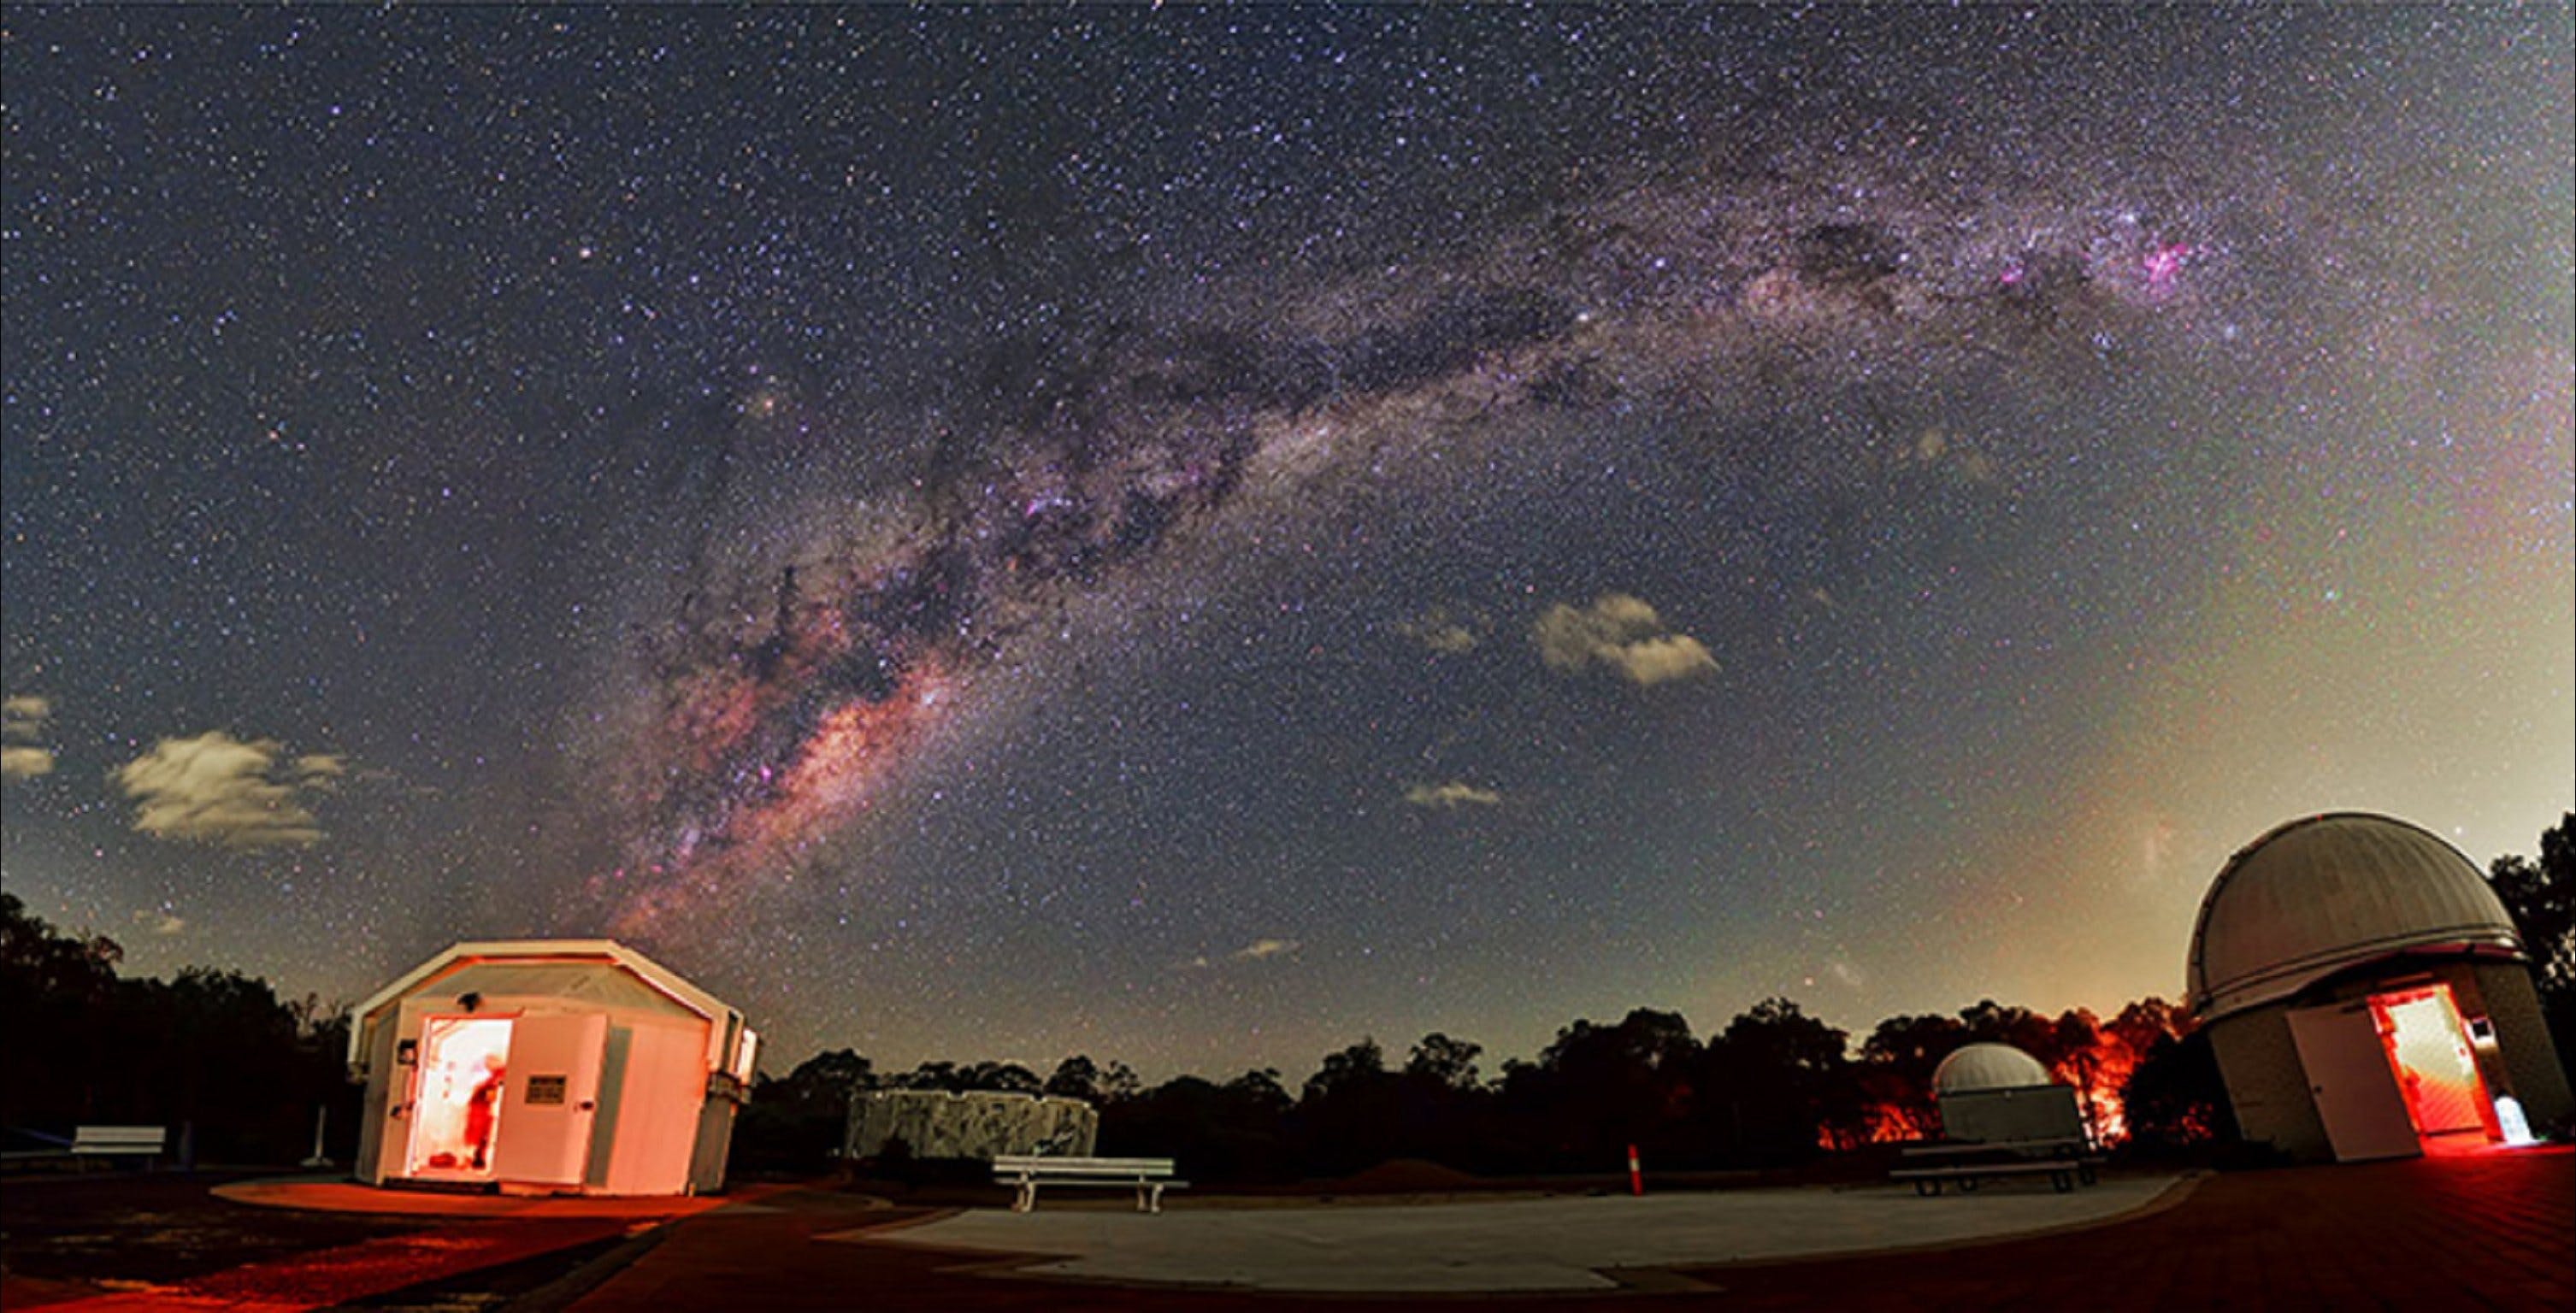 Perth Observatory - Kalgoorlie Accommodation